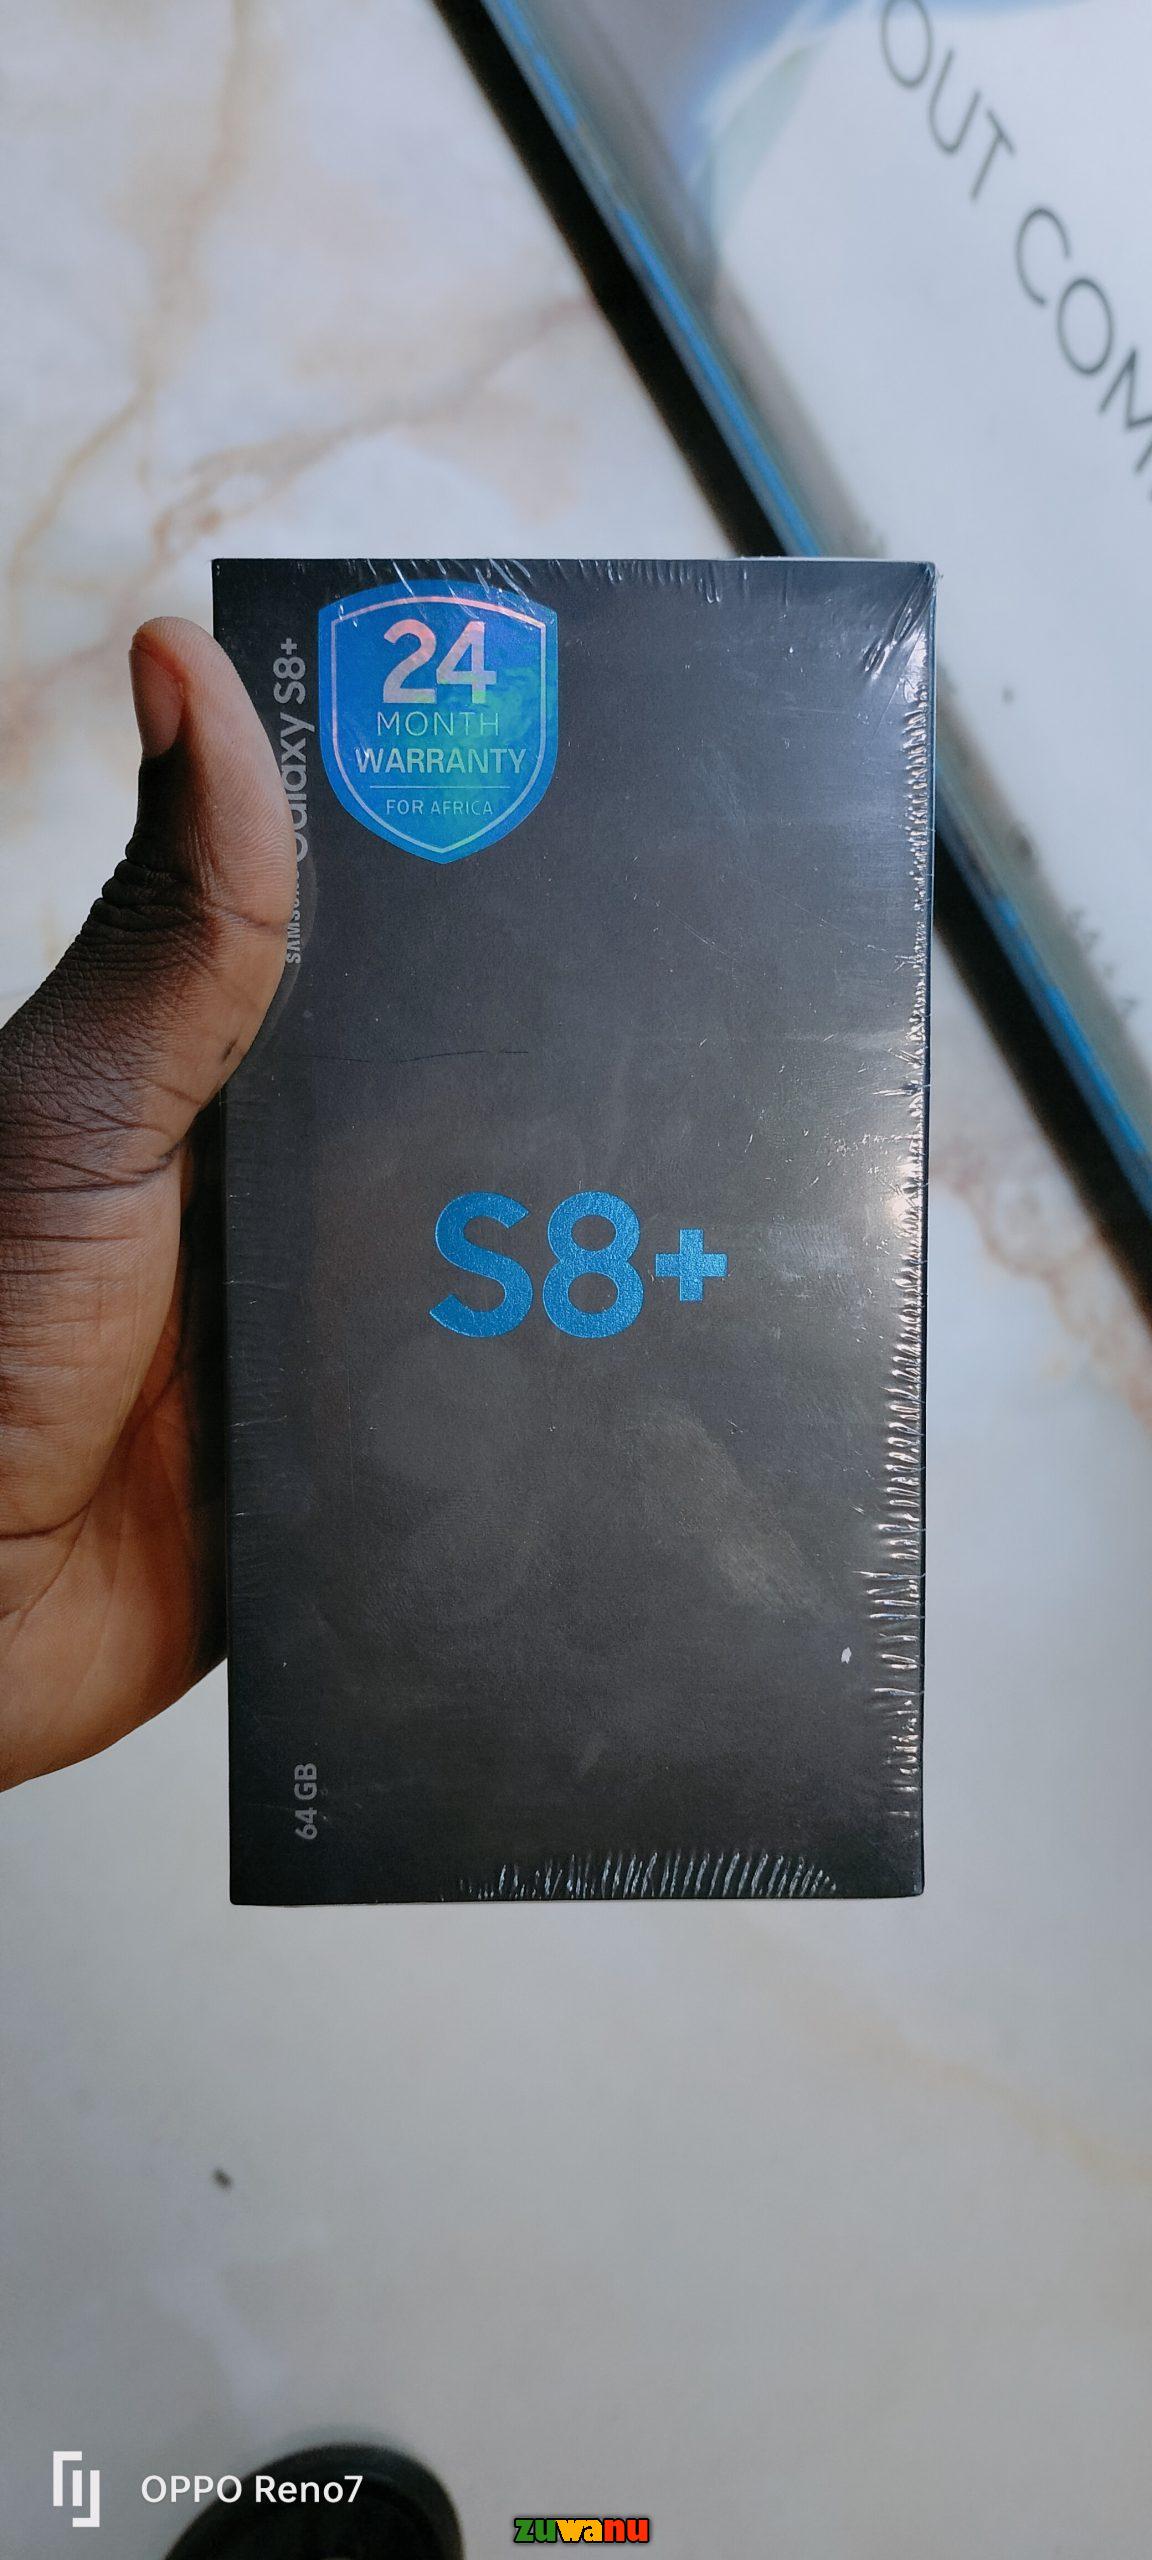 Samsung Galaxy s8 plus price in Nigeria